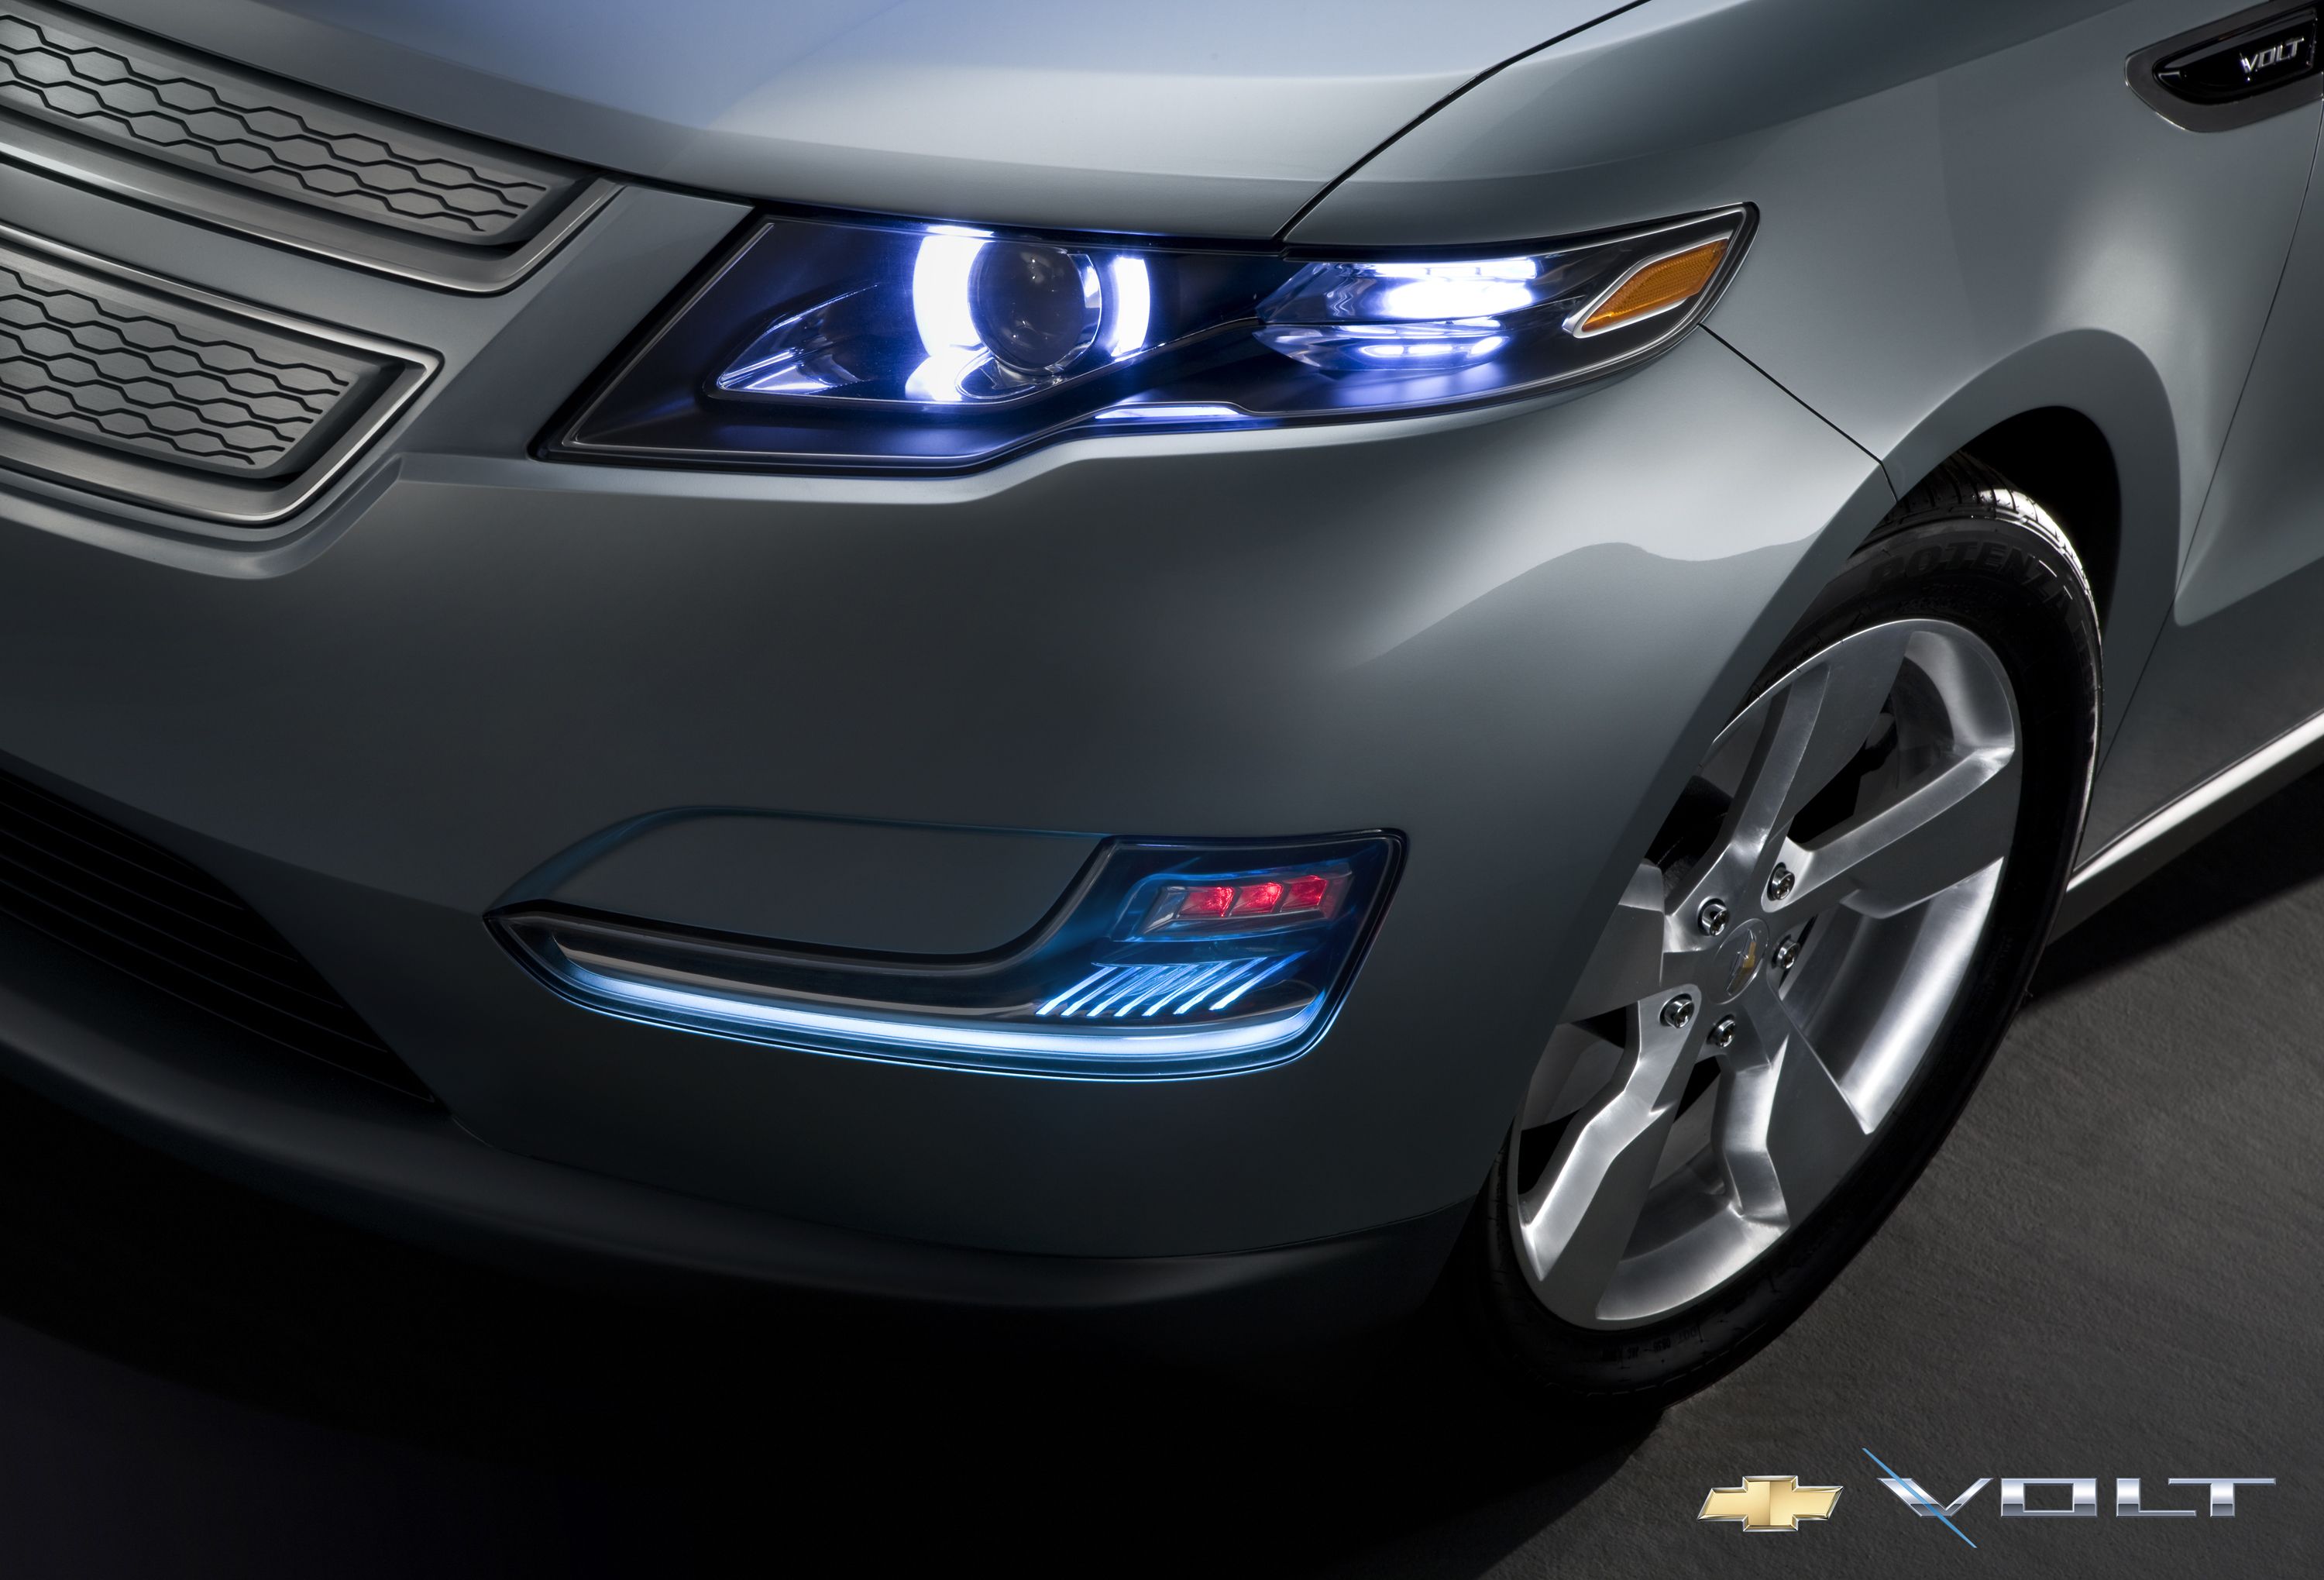 nissan leaf led headlight upgrade - Google Search | cars, cars, cars ...